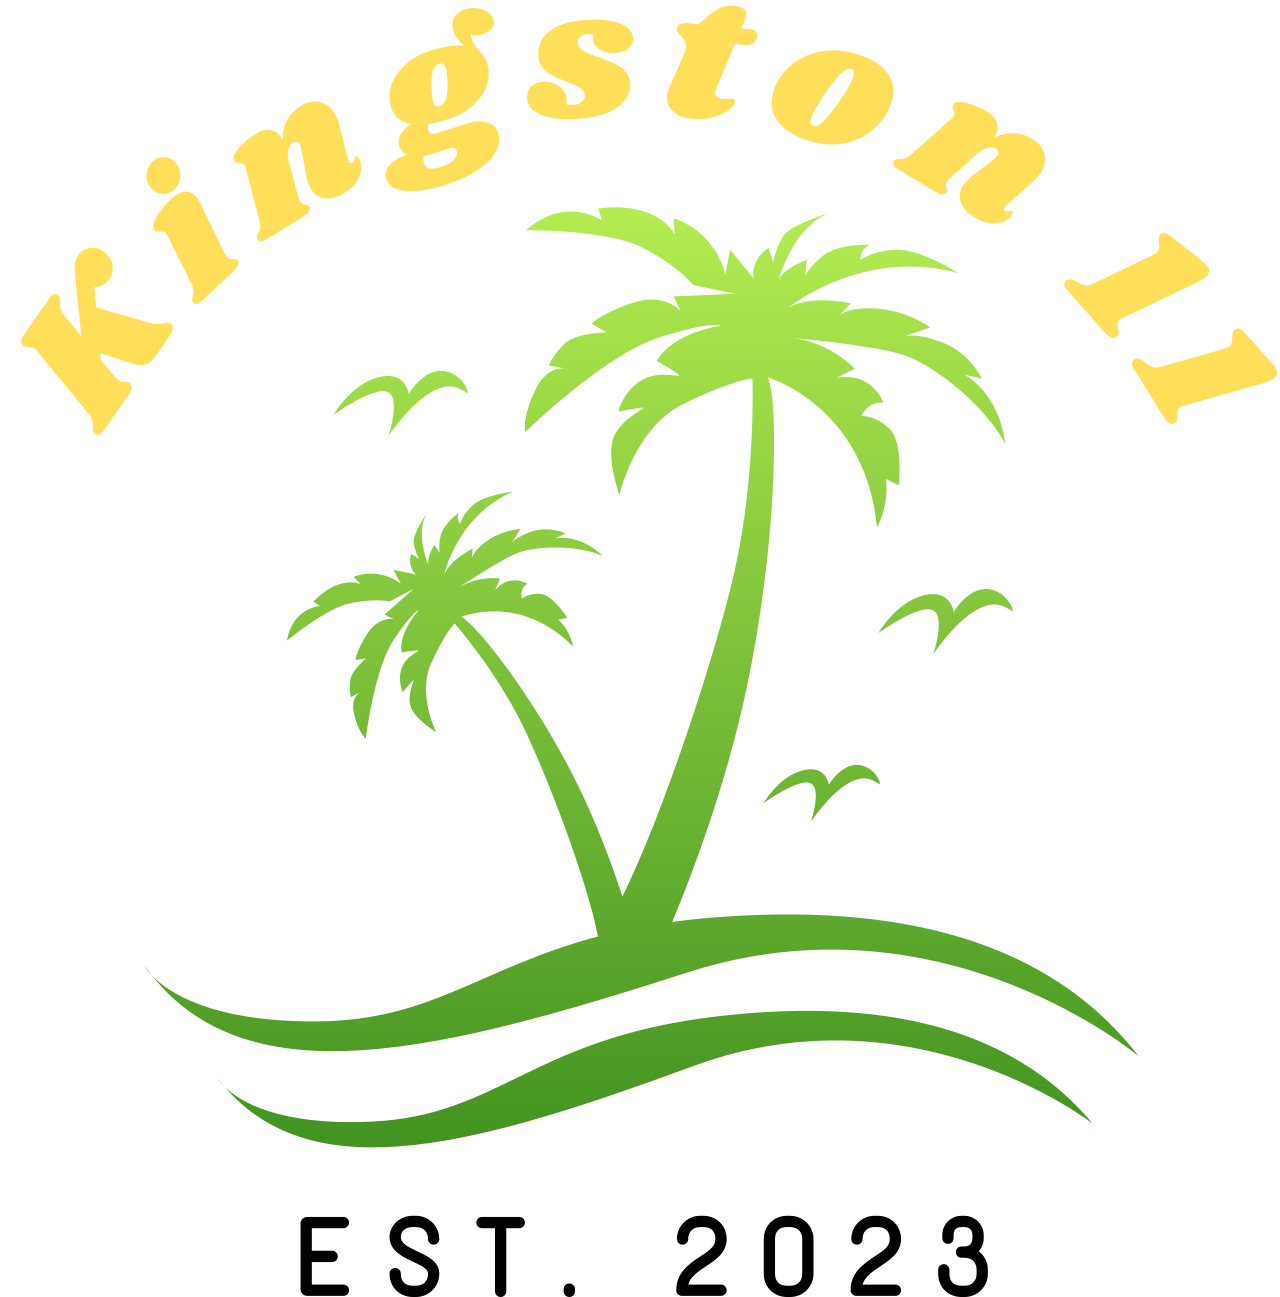 Kingston Eleven Apparel's logo